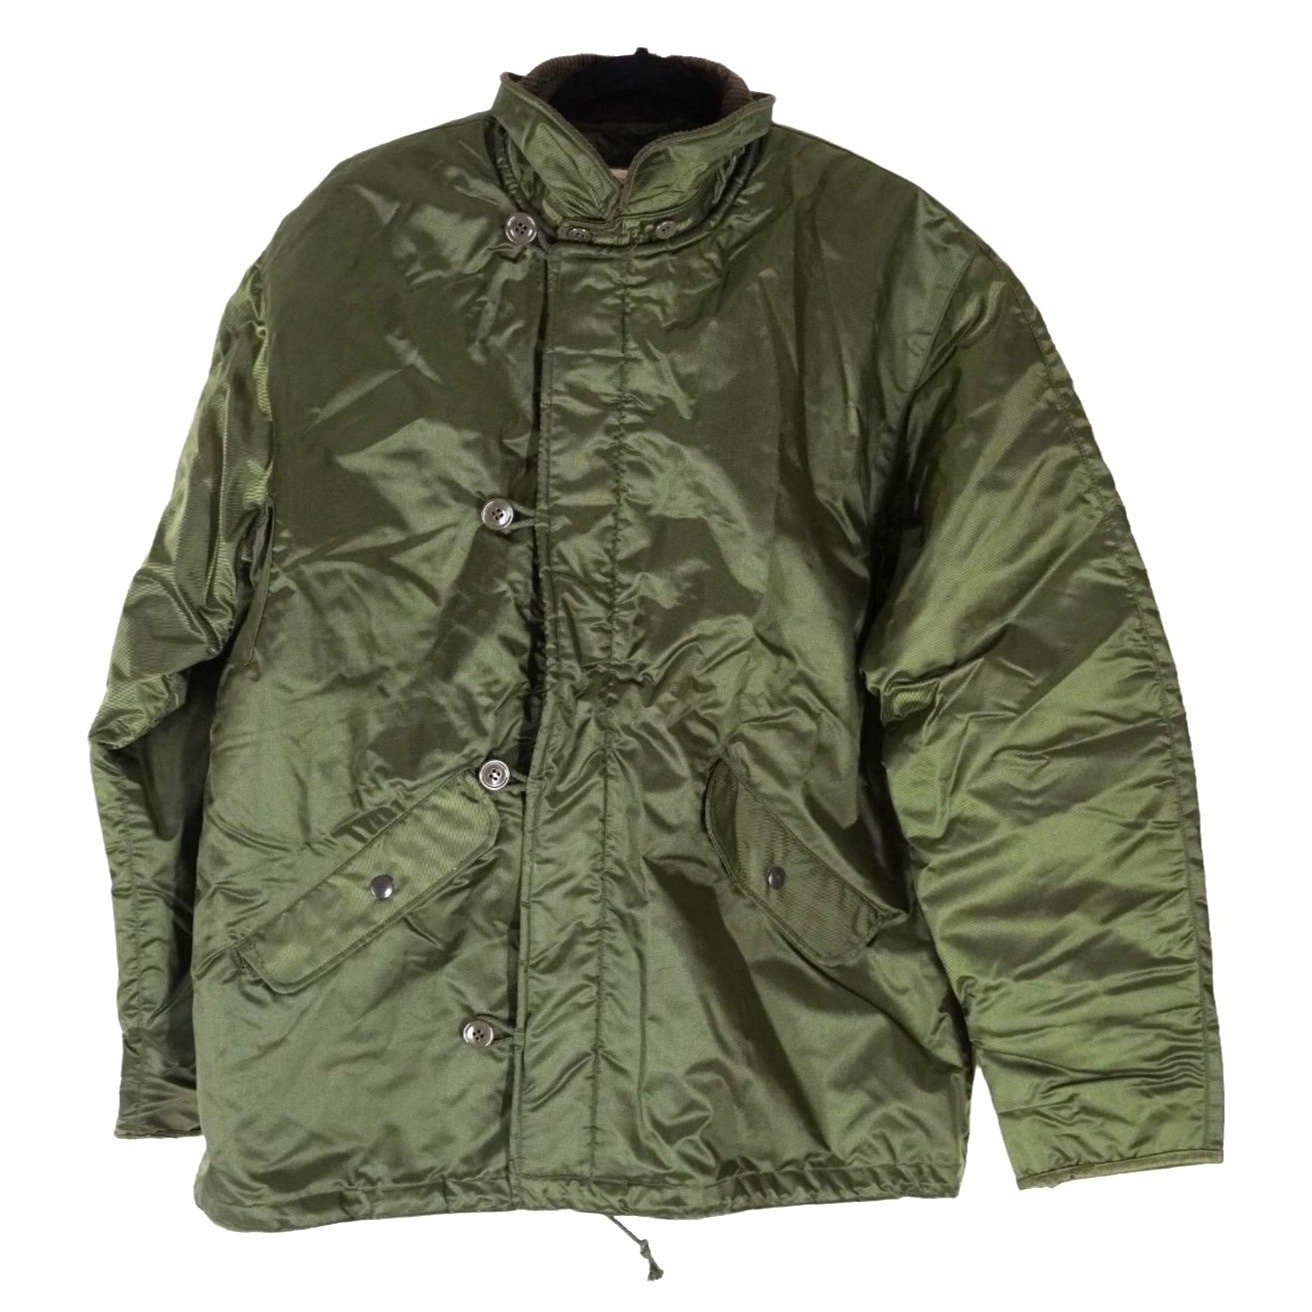 Vintage Jacket Extreme Cold Weather Impermeable Military Forest Service  Jacket Mens Size Large 42-44 